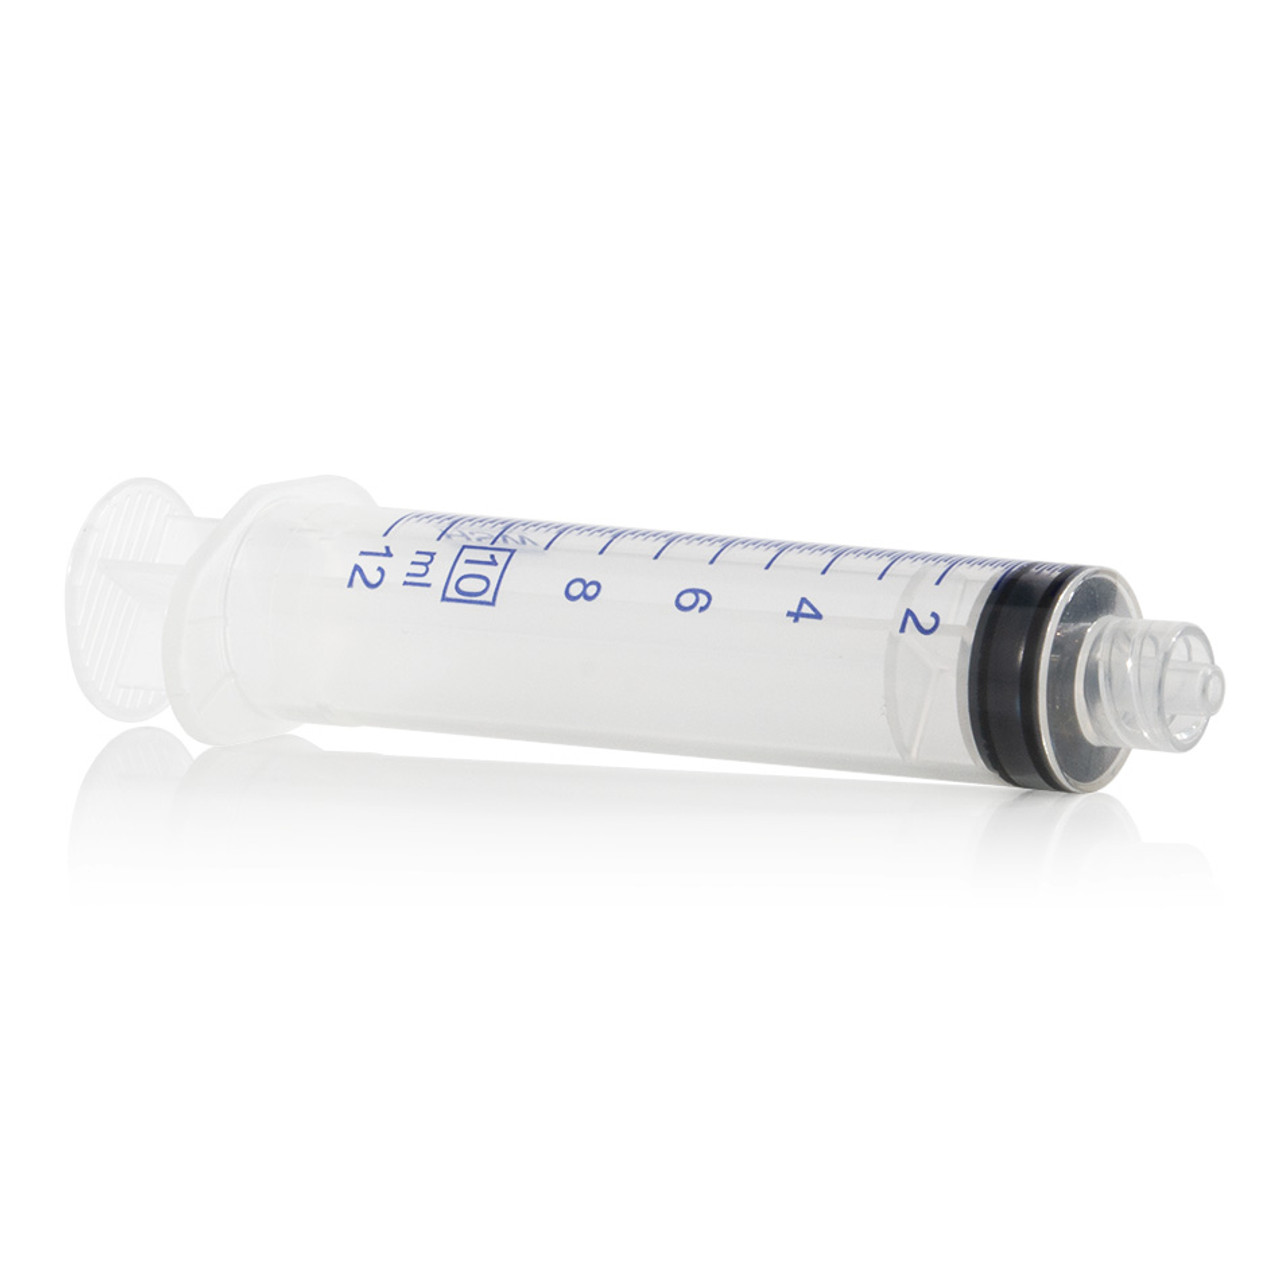 Plastic Syringes 5 Pack - 10ml or 30ml